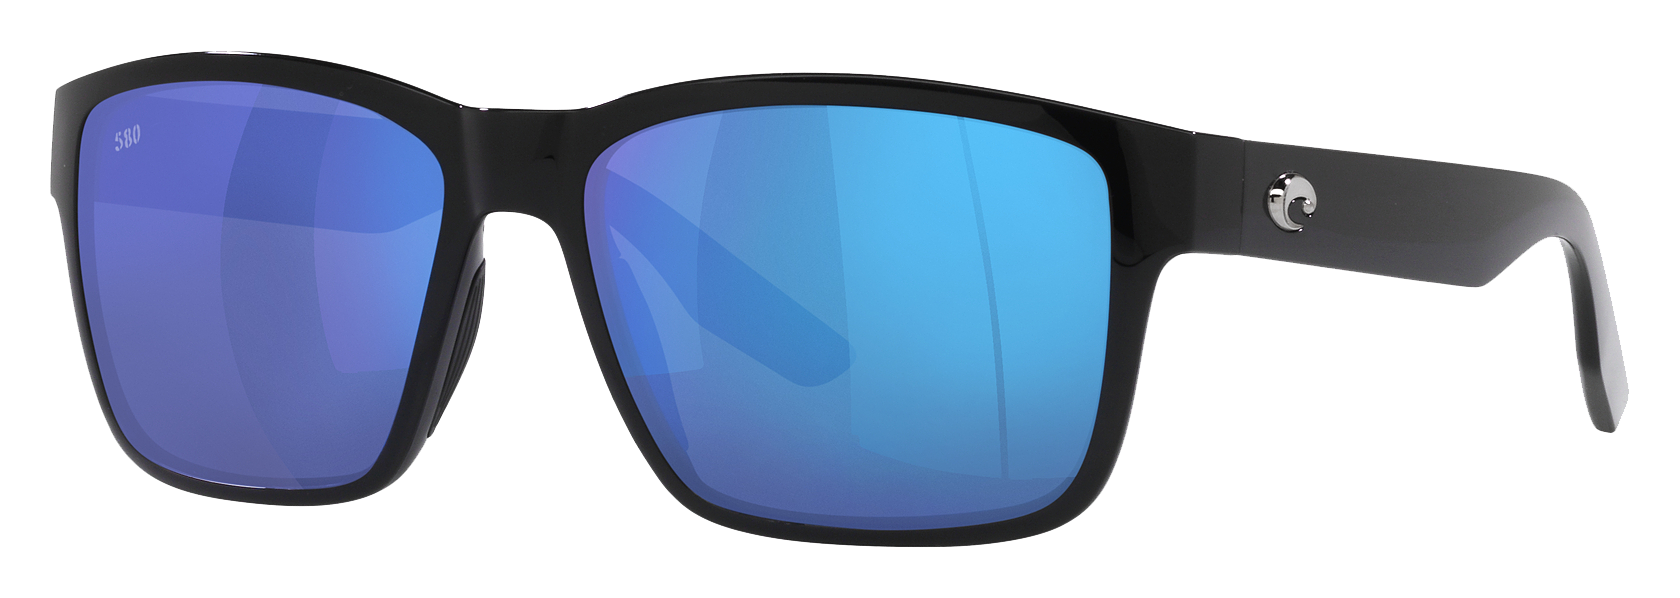 Costa Del Mar Paunch 580G Glass Polarized Sunglasses - Black/Blue Mirror - Large